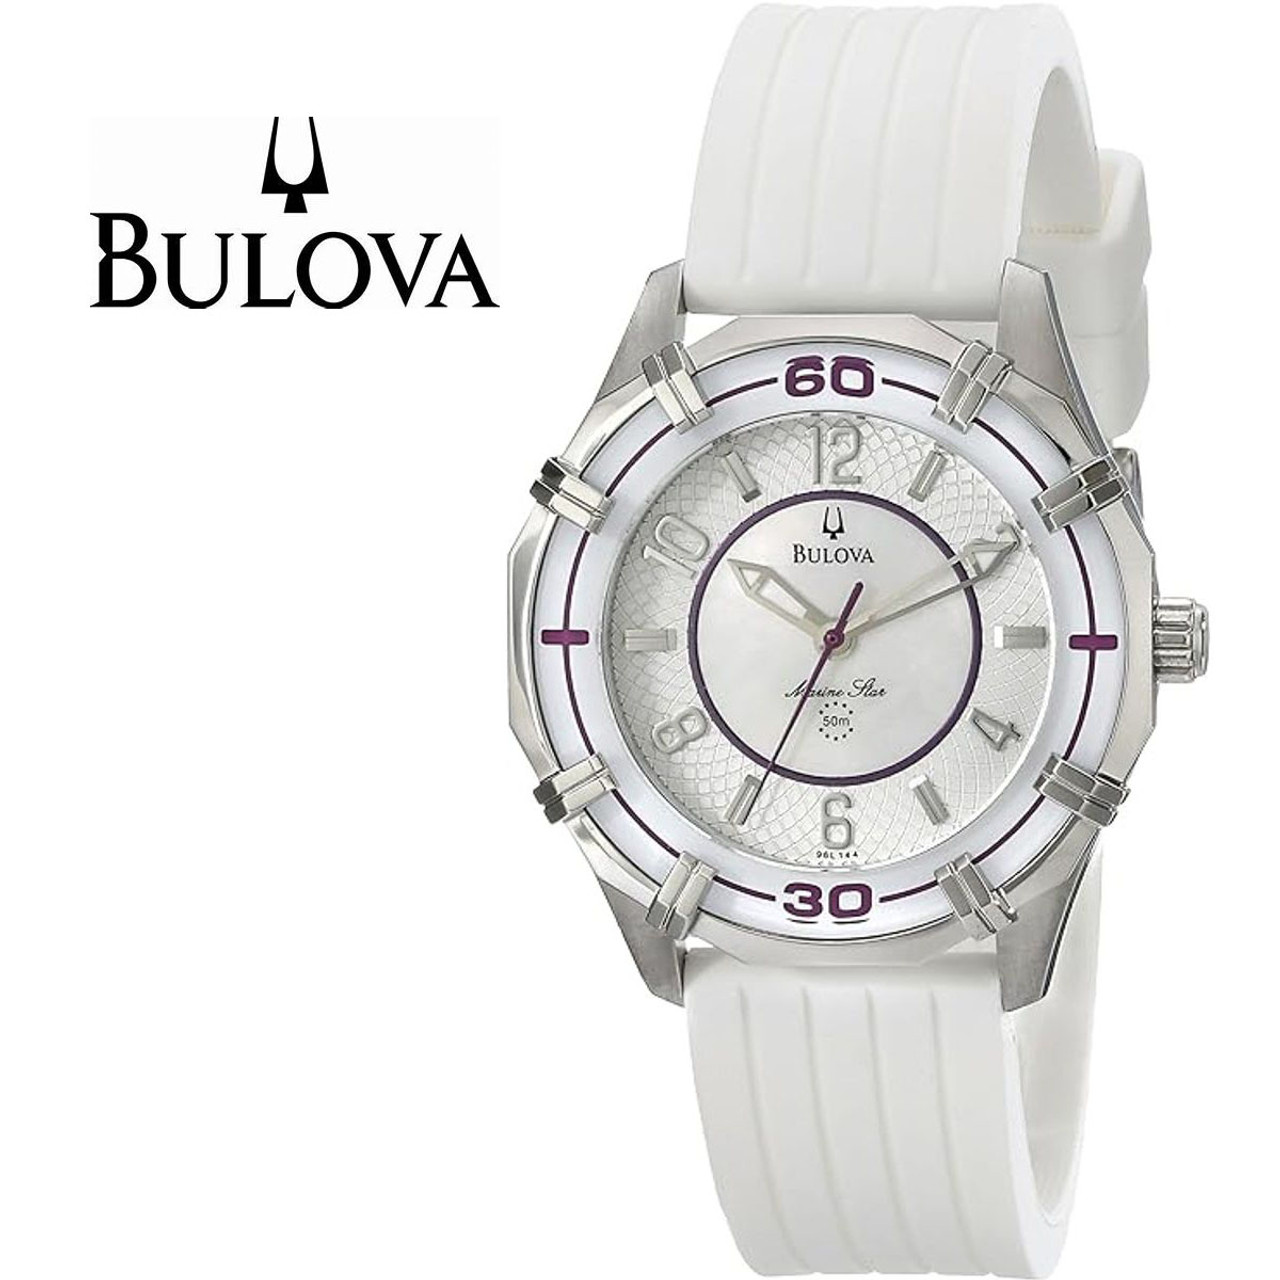 Women's Bulova Solano Marine Star Silicone Watch product image